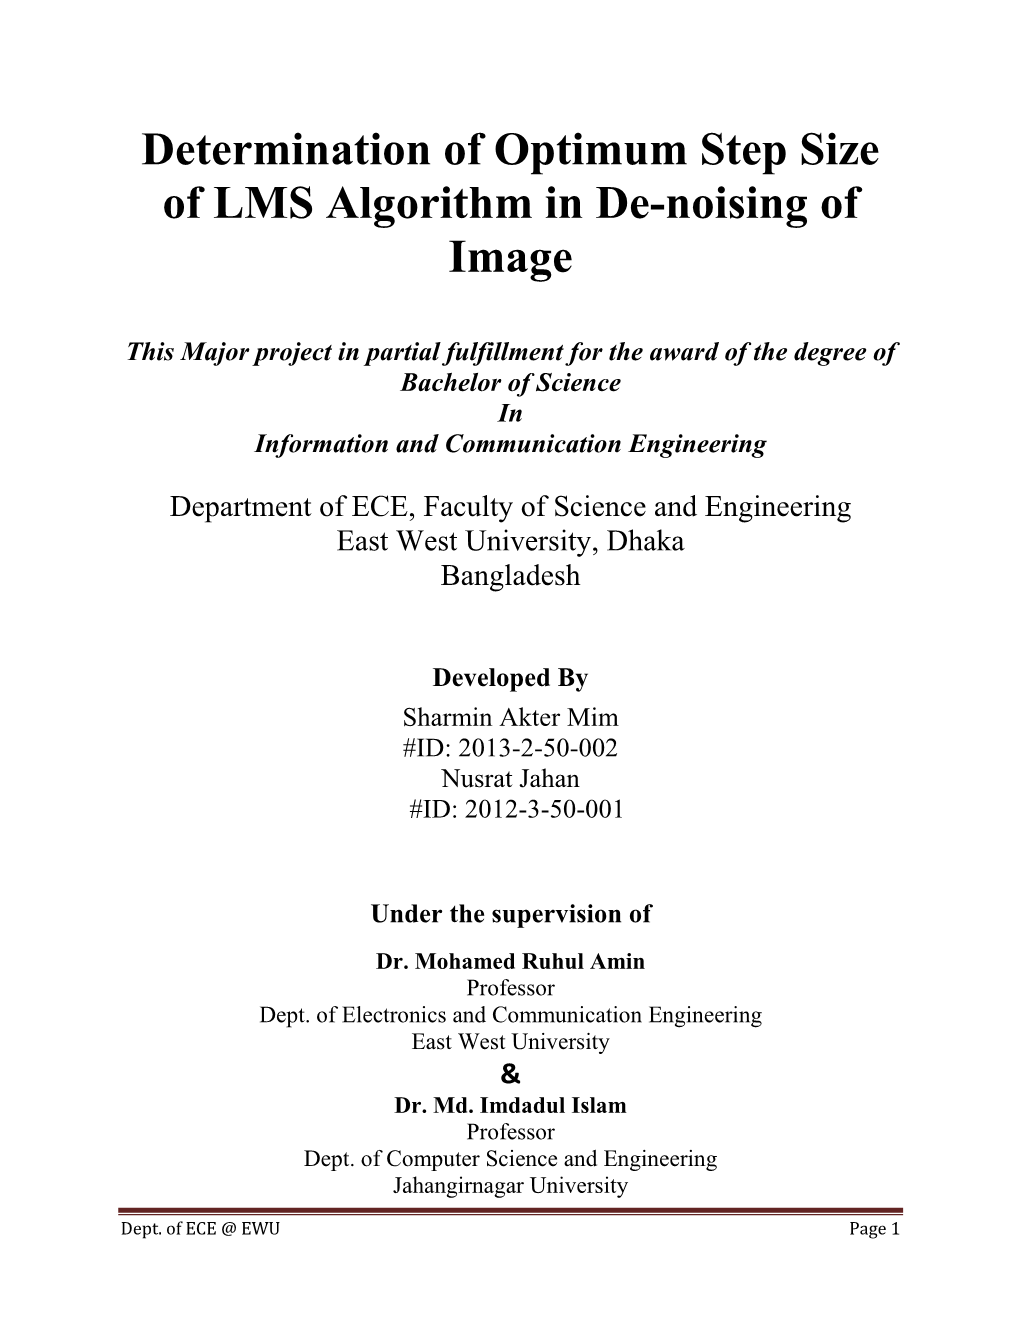 Determination of Optimum Step Size of LMS Algorithm in De-Noising of Image